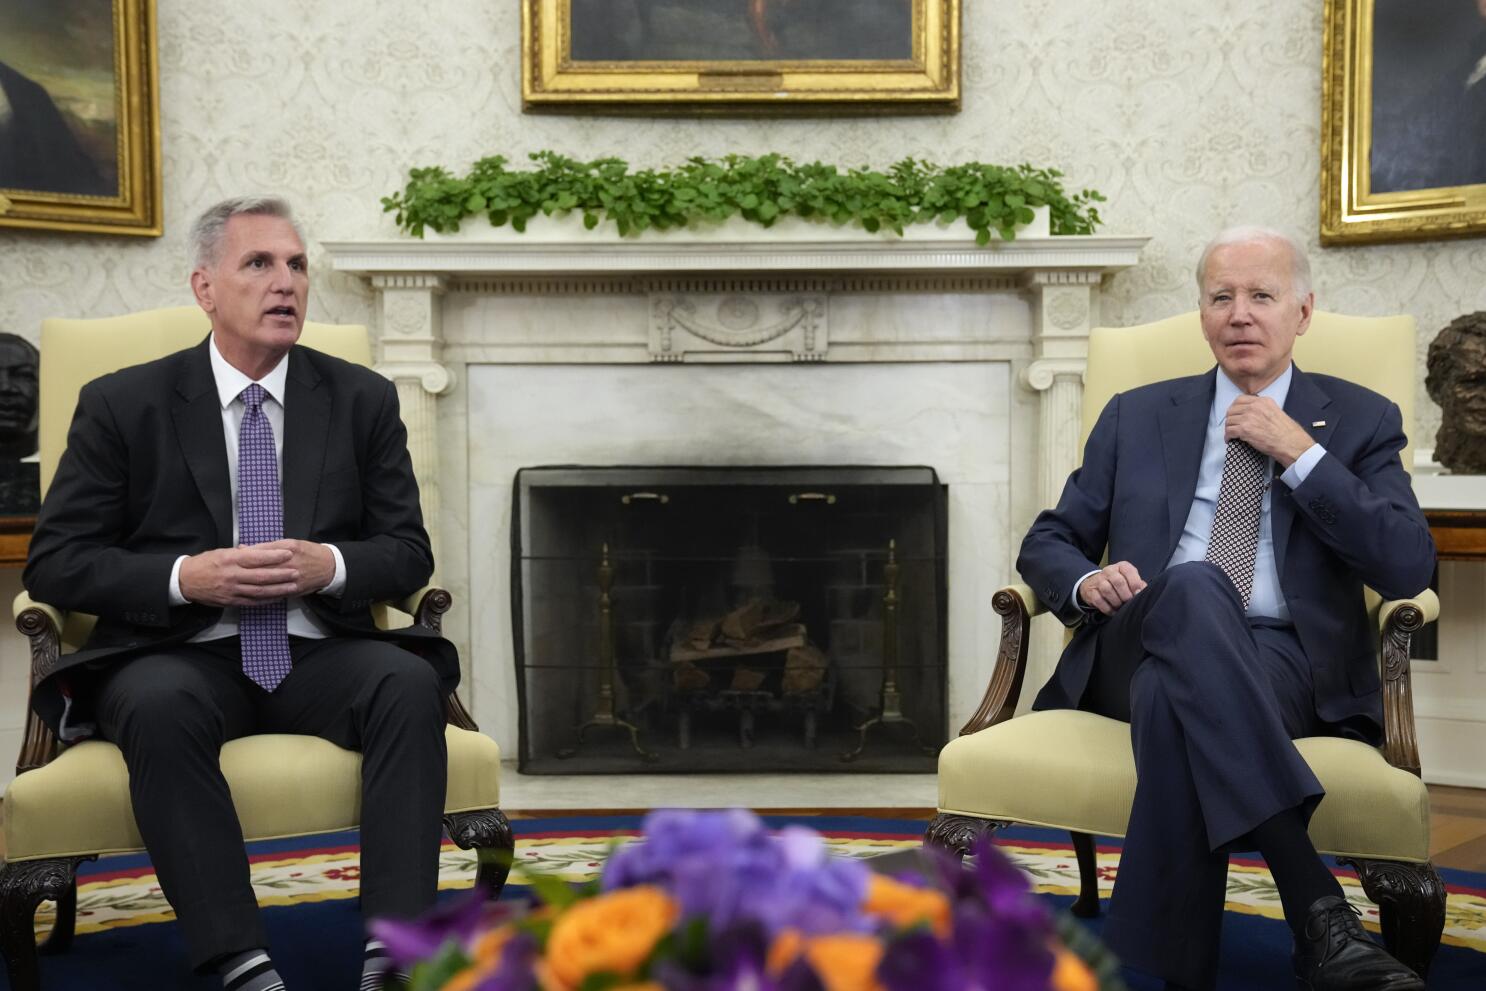 Dodgers praised by President Biden during White House visit